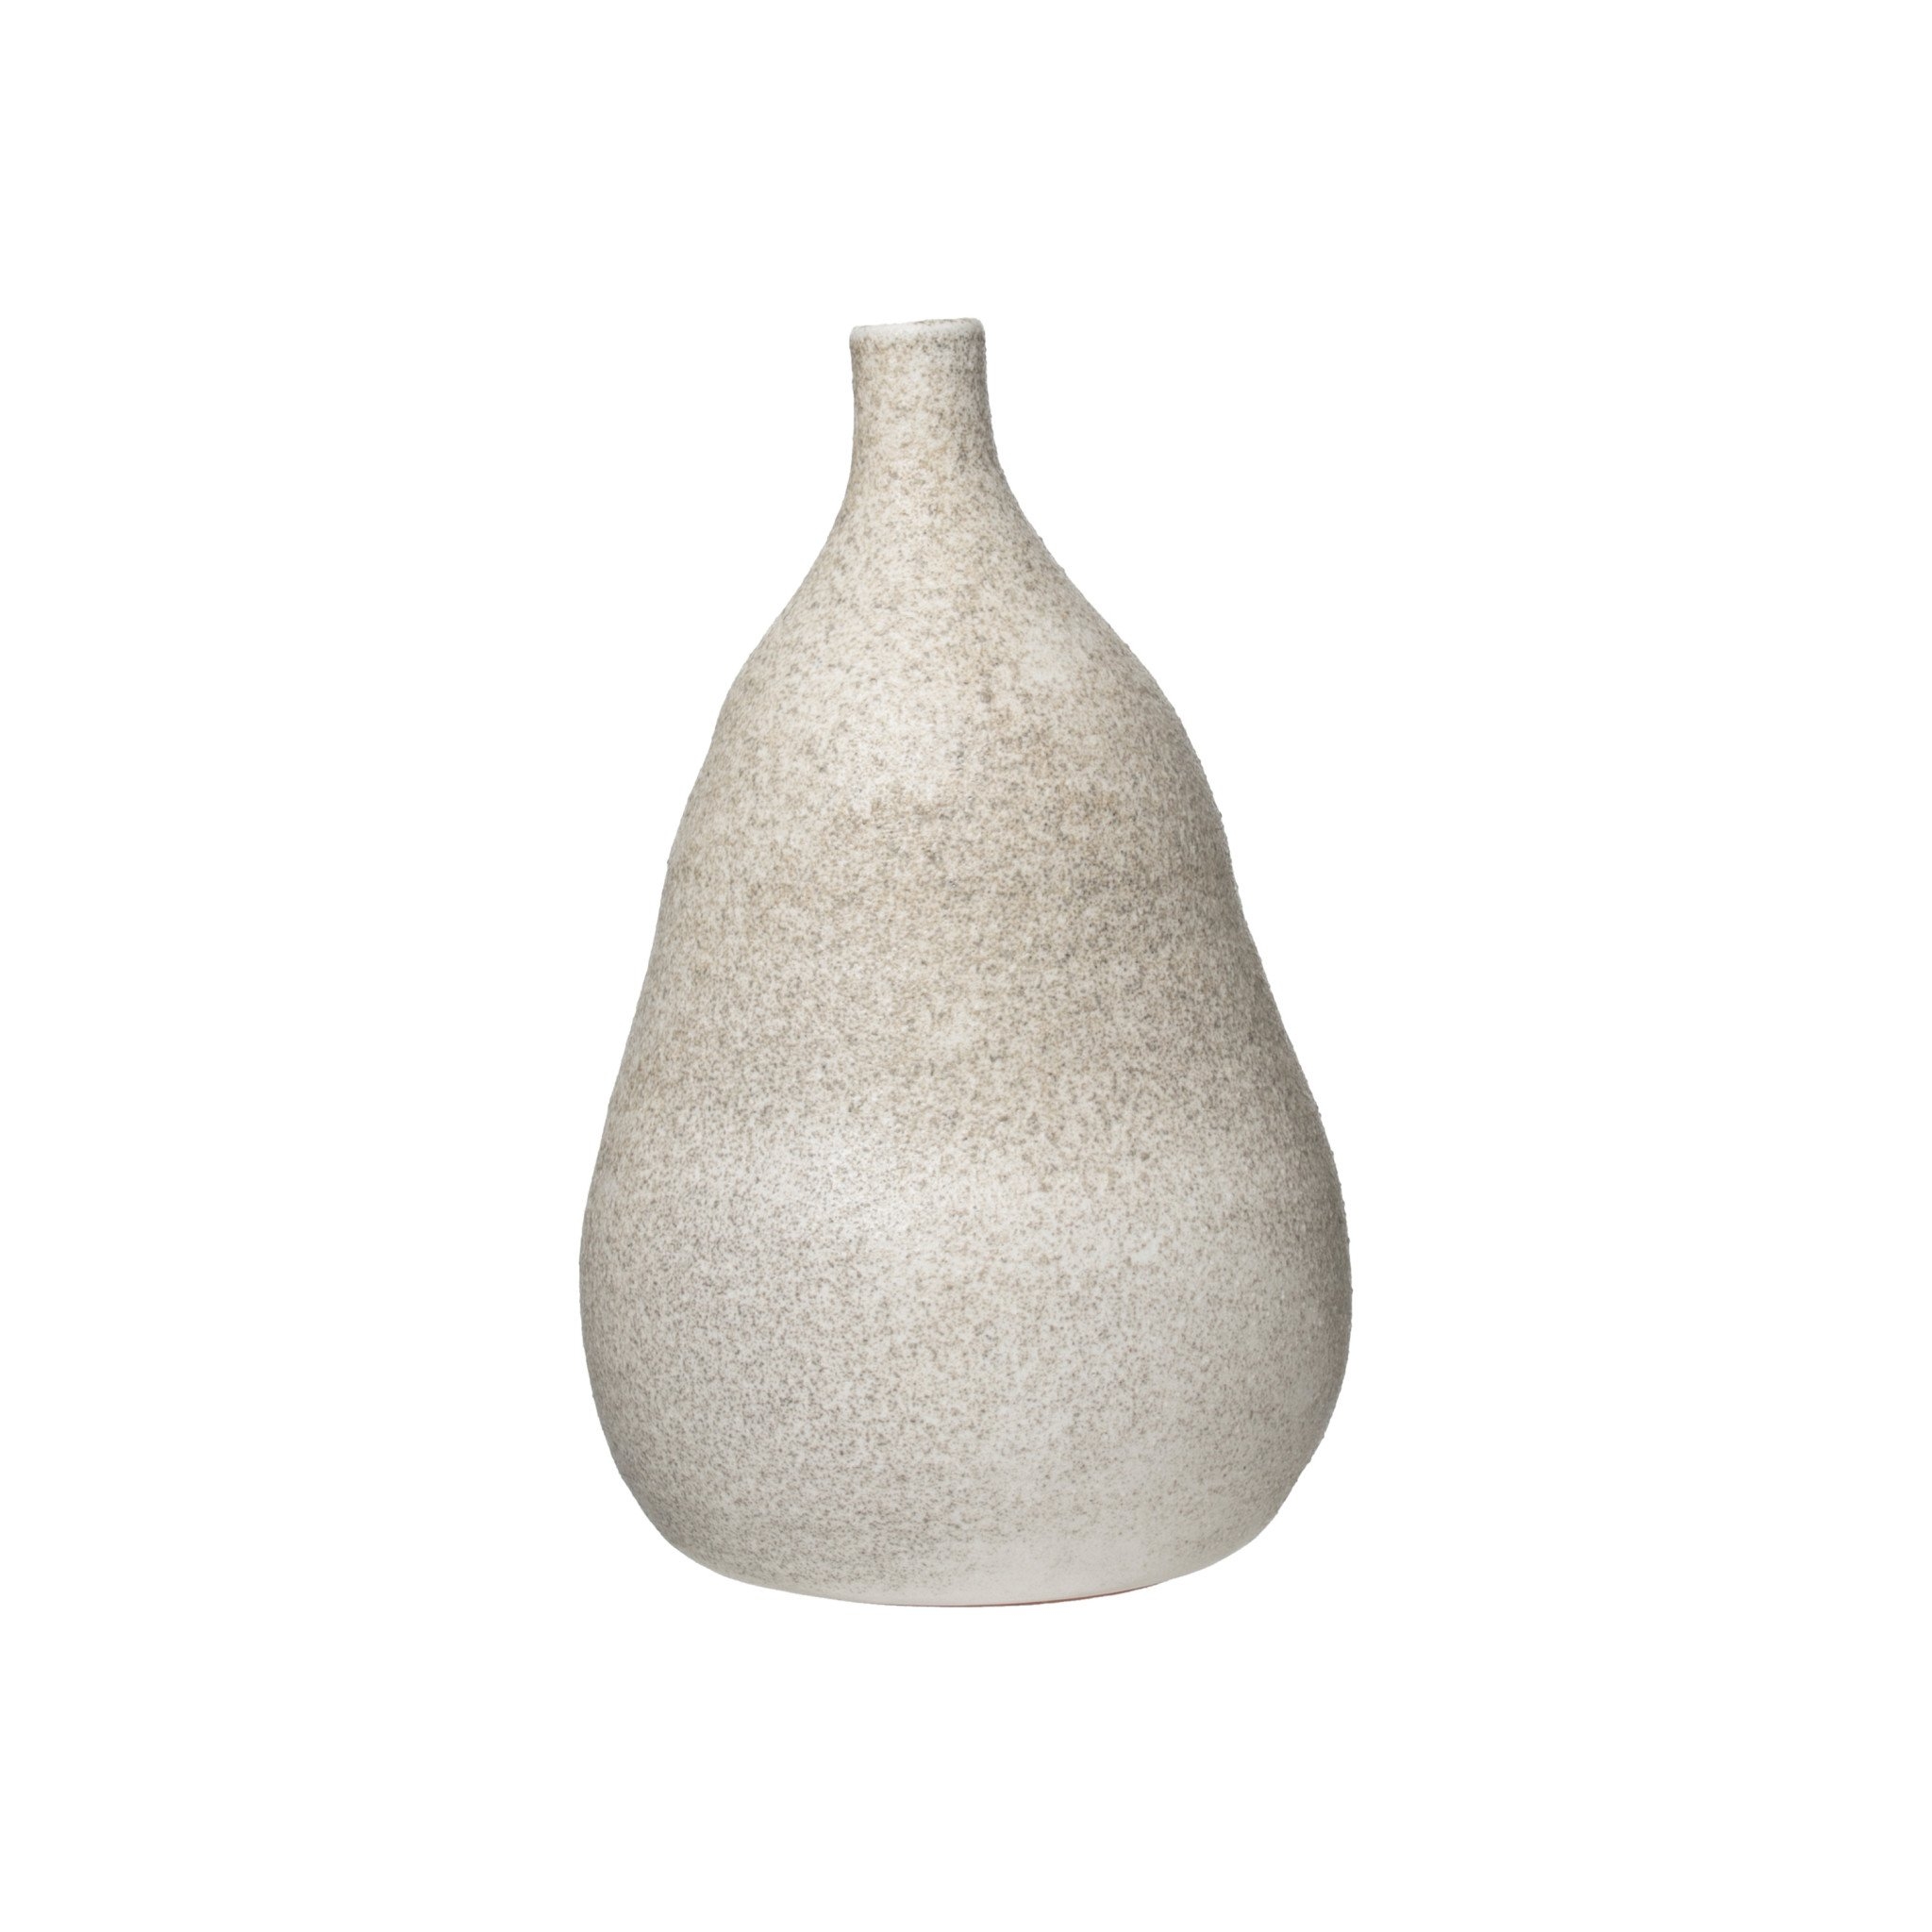 Medium Textured Terracotta Vase with Narrow Top & Distressed Finish - Image 0